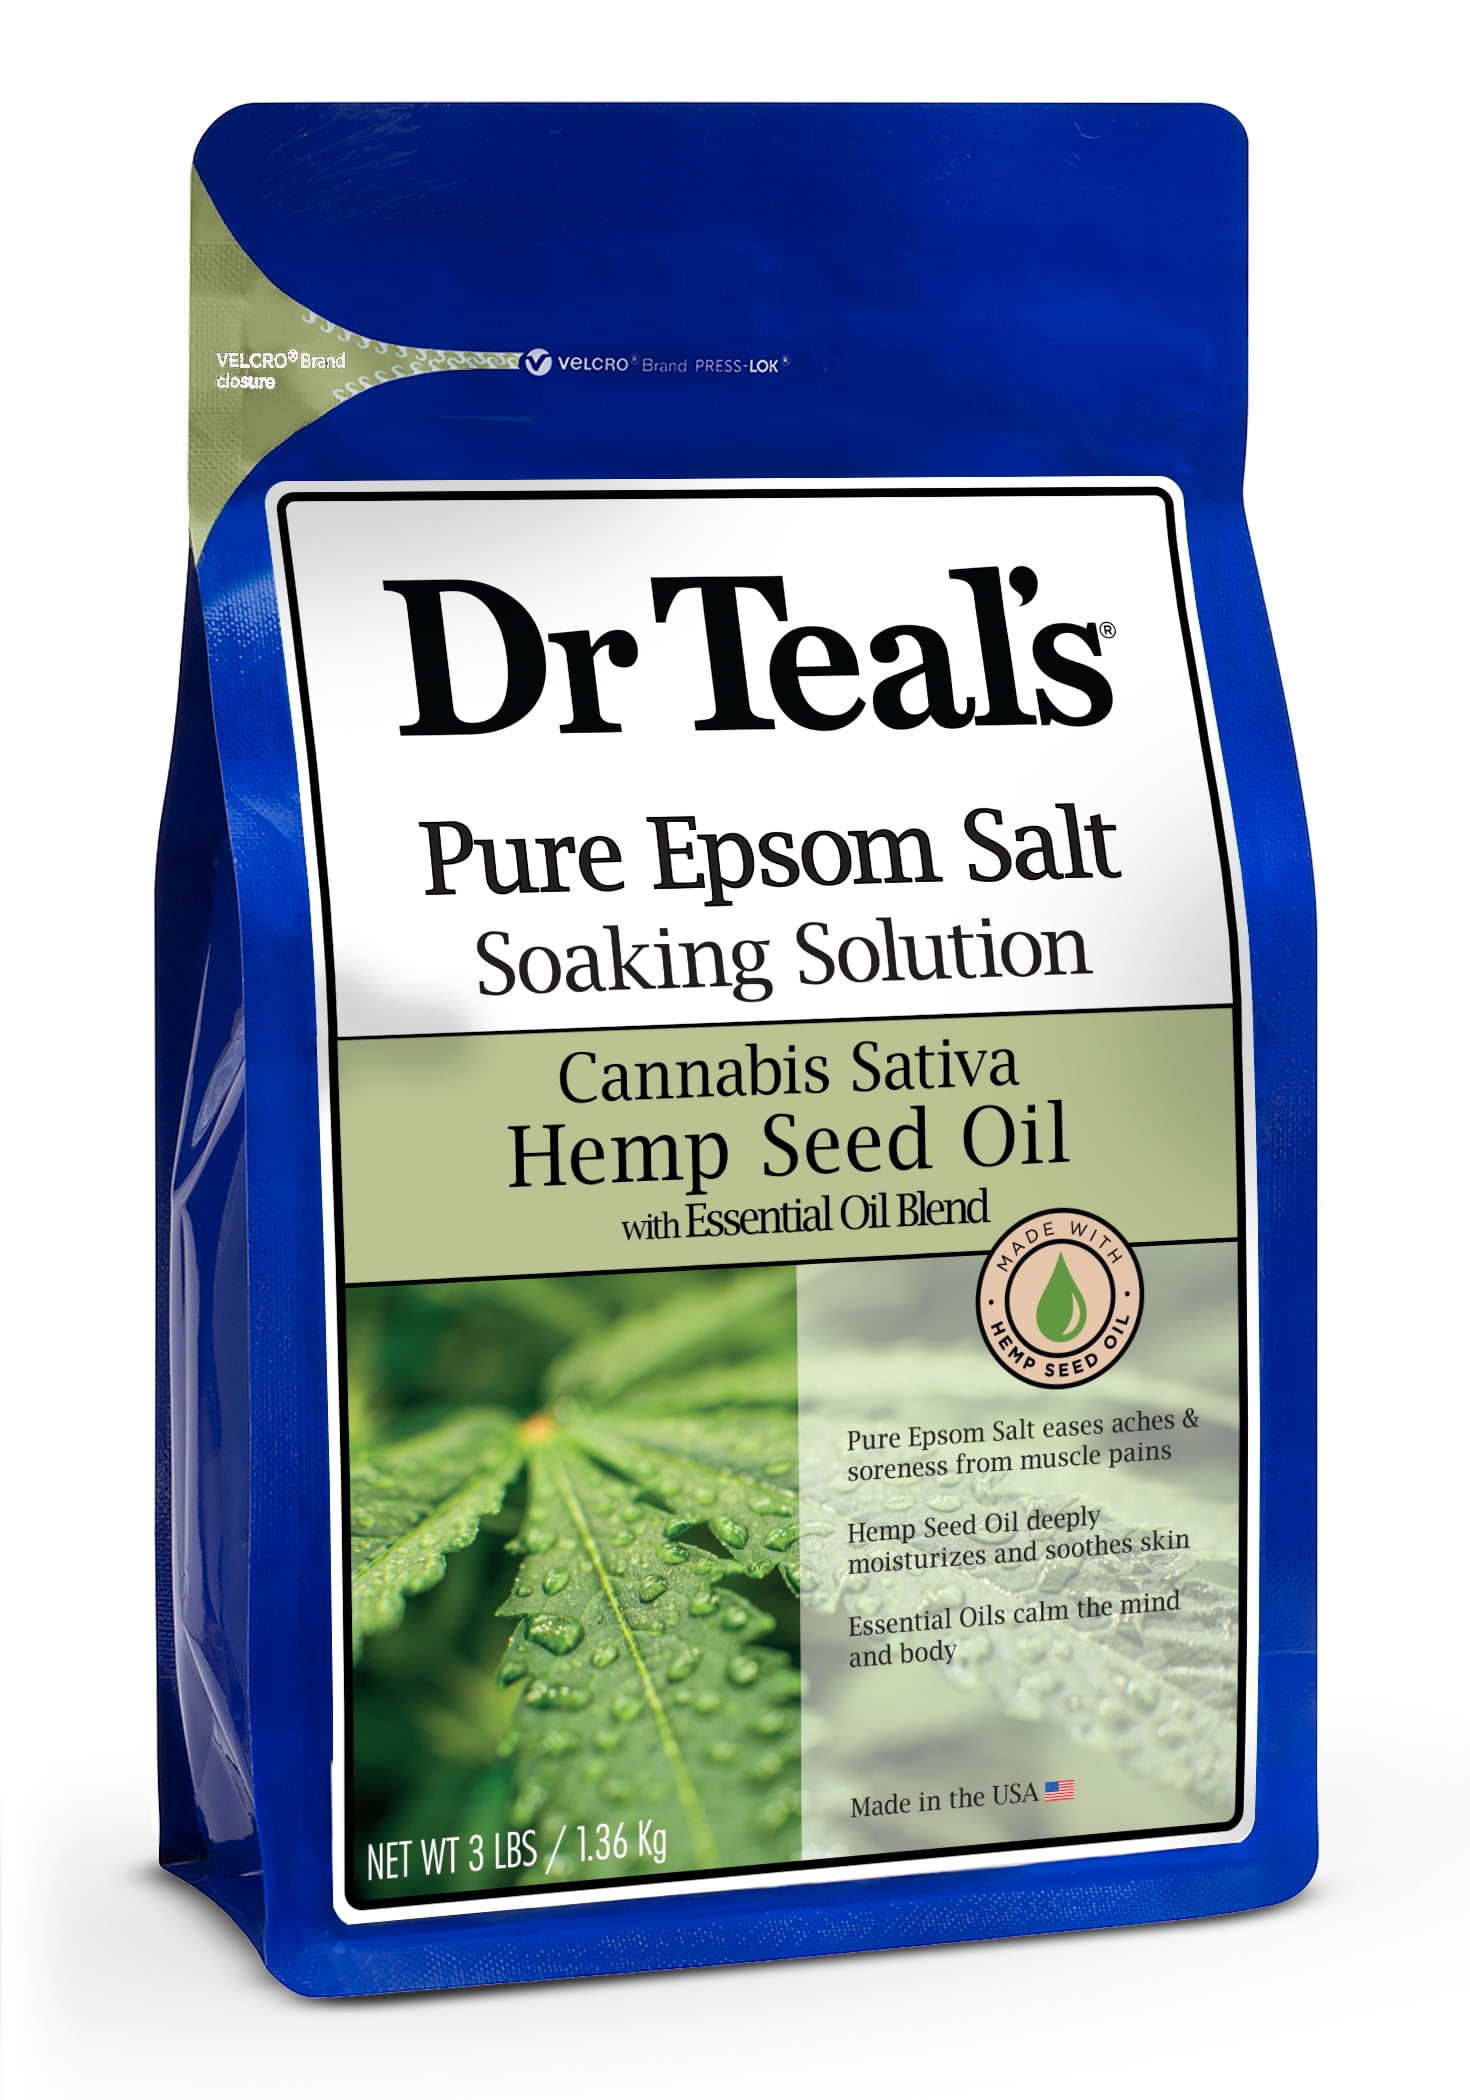 Dr Teal's Pure Epsom Salt Soak, Cannabis Sativa Hemp Seed Oil with Essential Oil Blend, 3 lbs